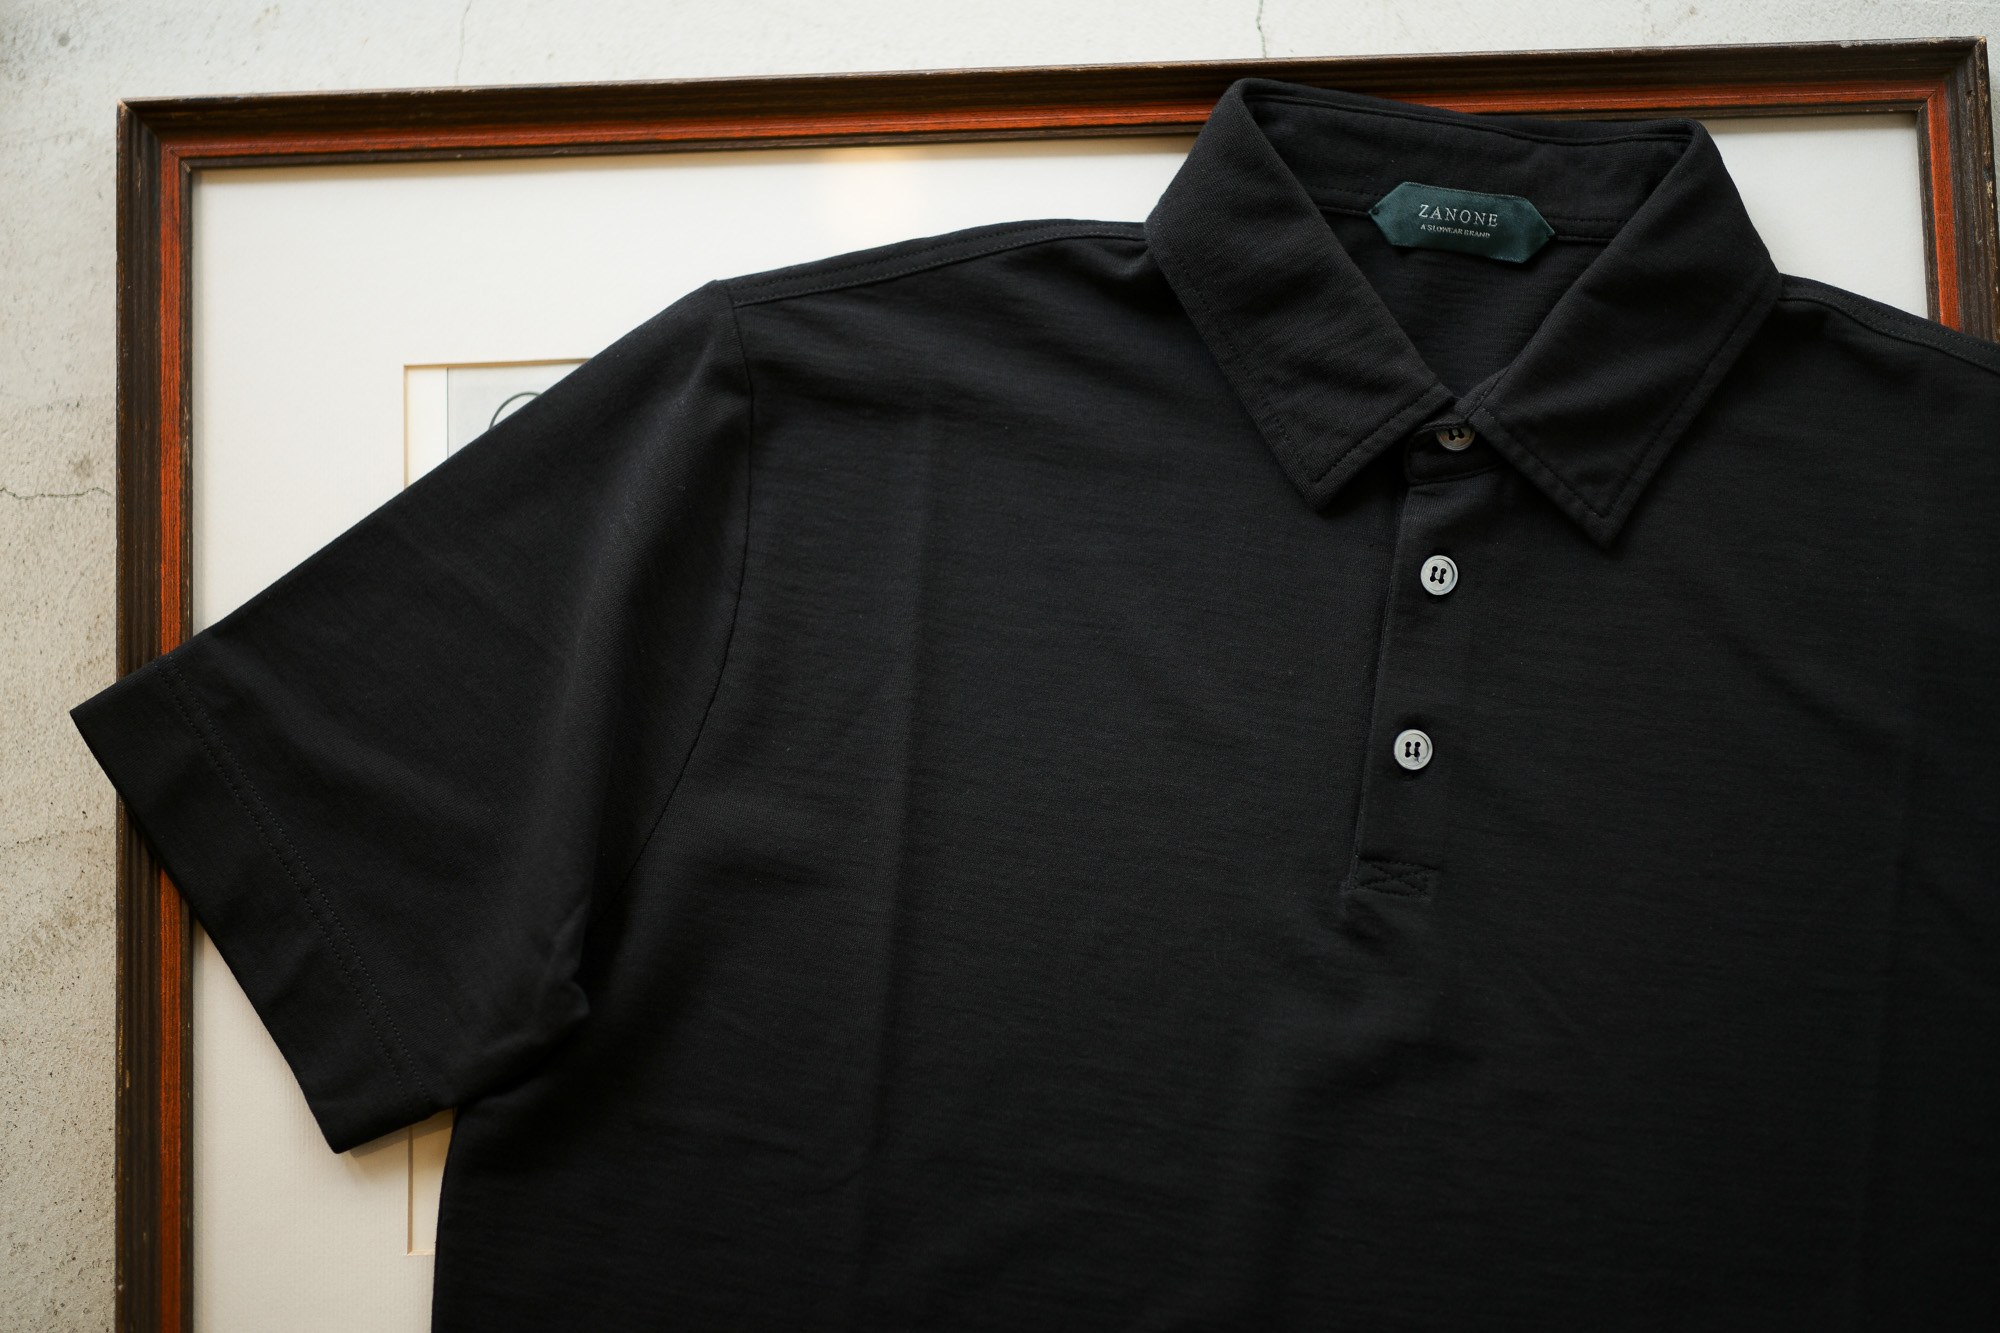 ZANONE(ザノーネ) Polo Shirt ice cotton アイスコットン ポロシャツ BLACK (ブラック・Z0015) made in italy (イタリア製) 2019 春夏新作 愛知 名古屋 altoediritto アルトエデリット